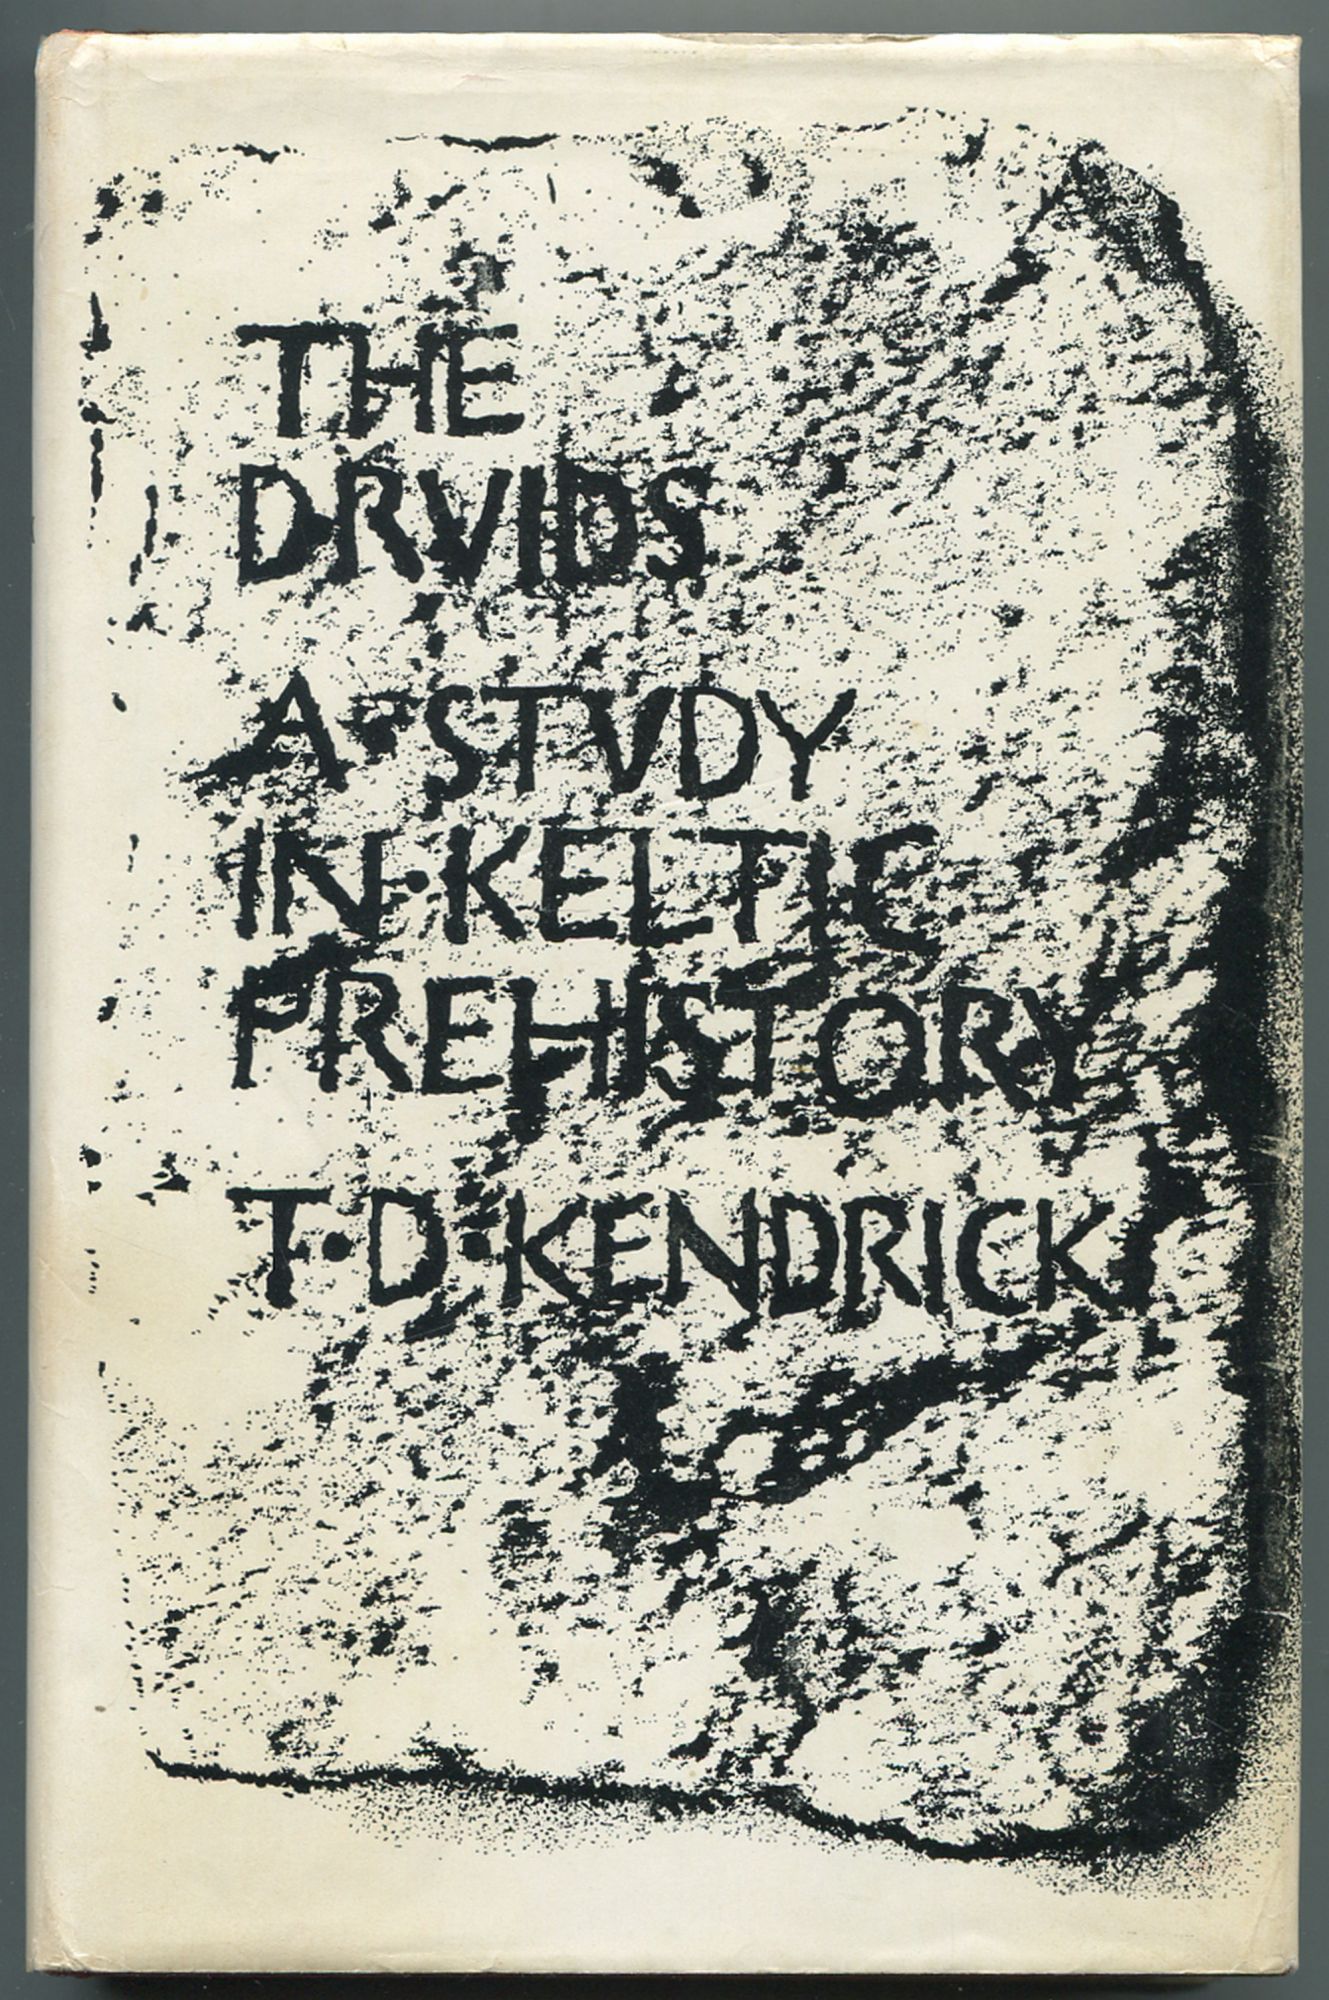 Druids: A Study in Keltic Prehistory - KENDRICK, T.D.